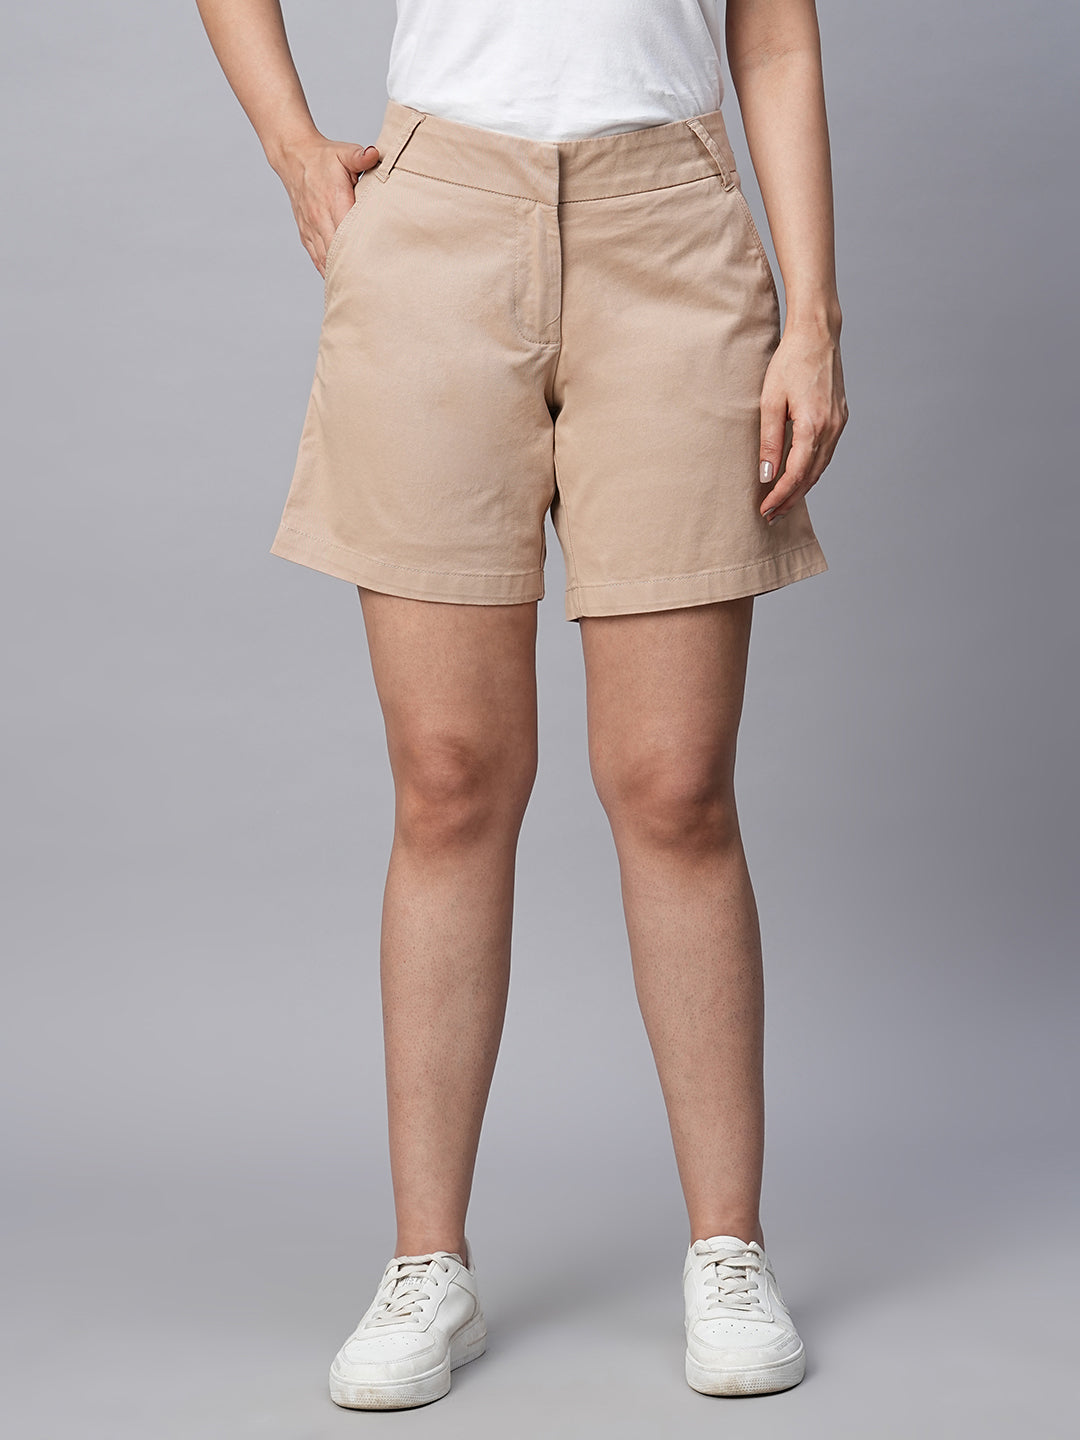 Women's Beige Cotton Lycra Regular Fit Shorts